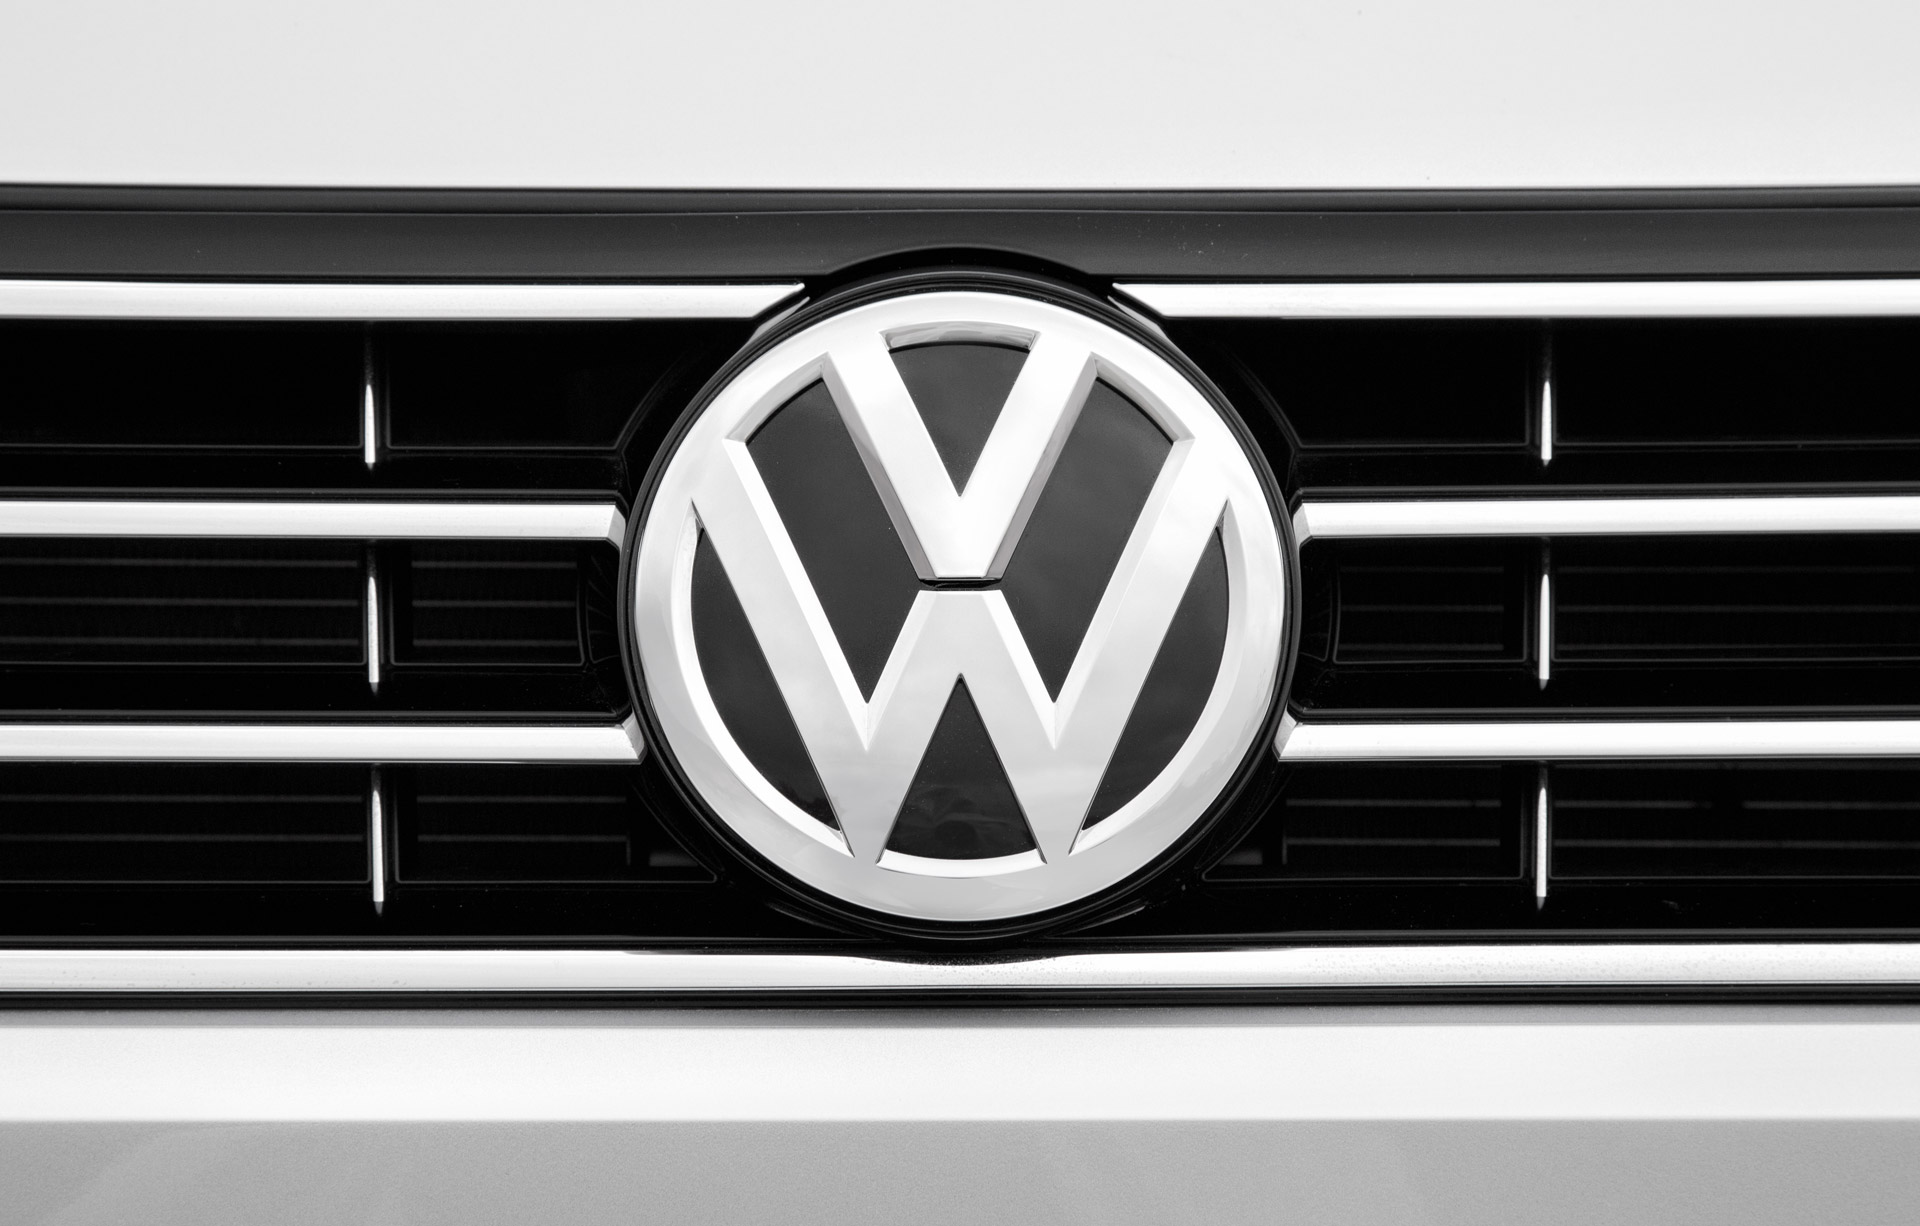 Audi Logo in Black & White Wallpaper - Brands HD Wallpapers 